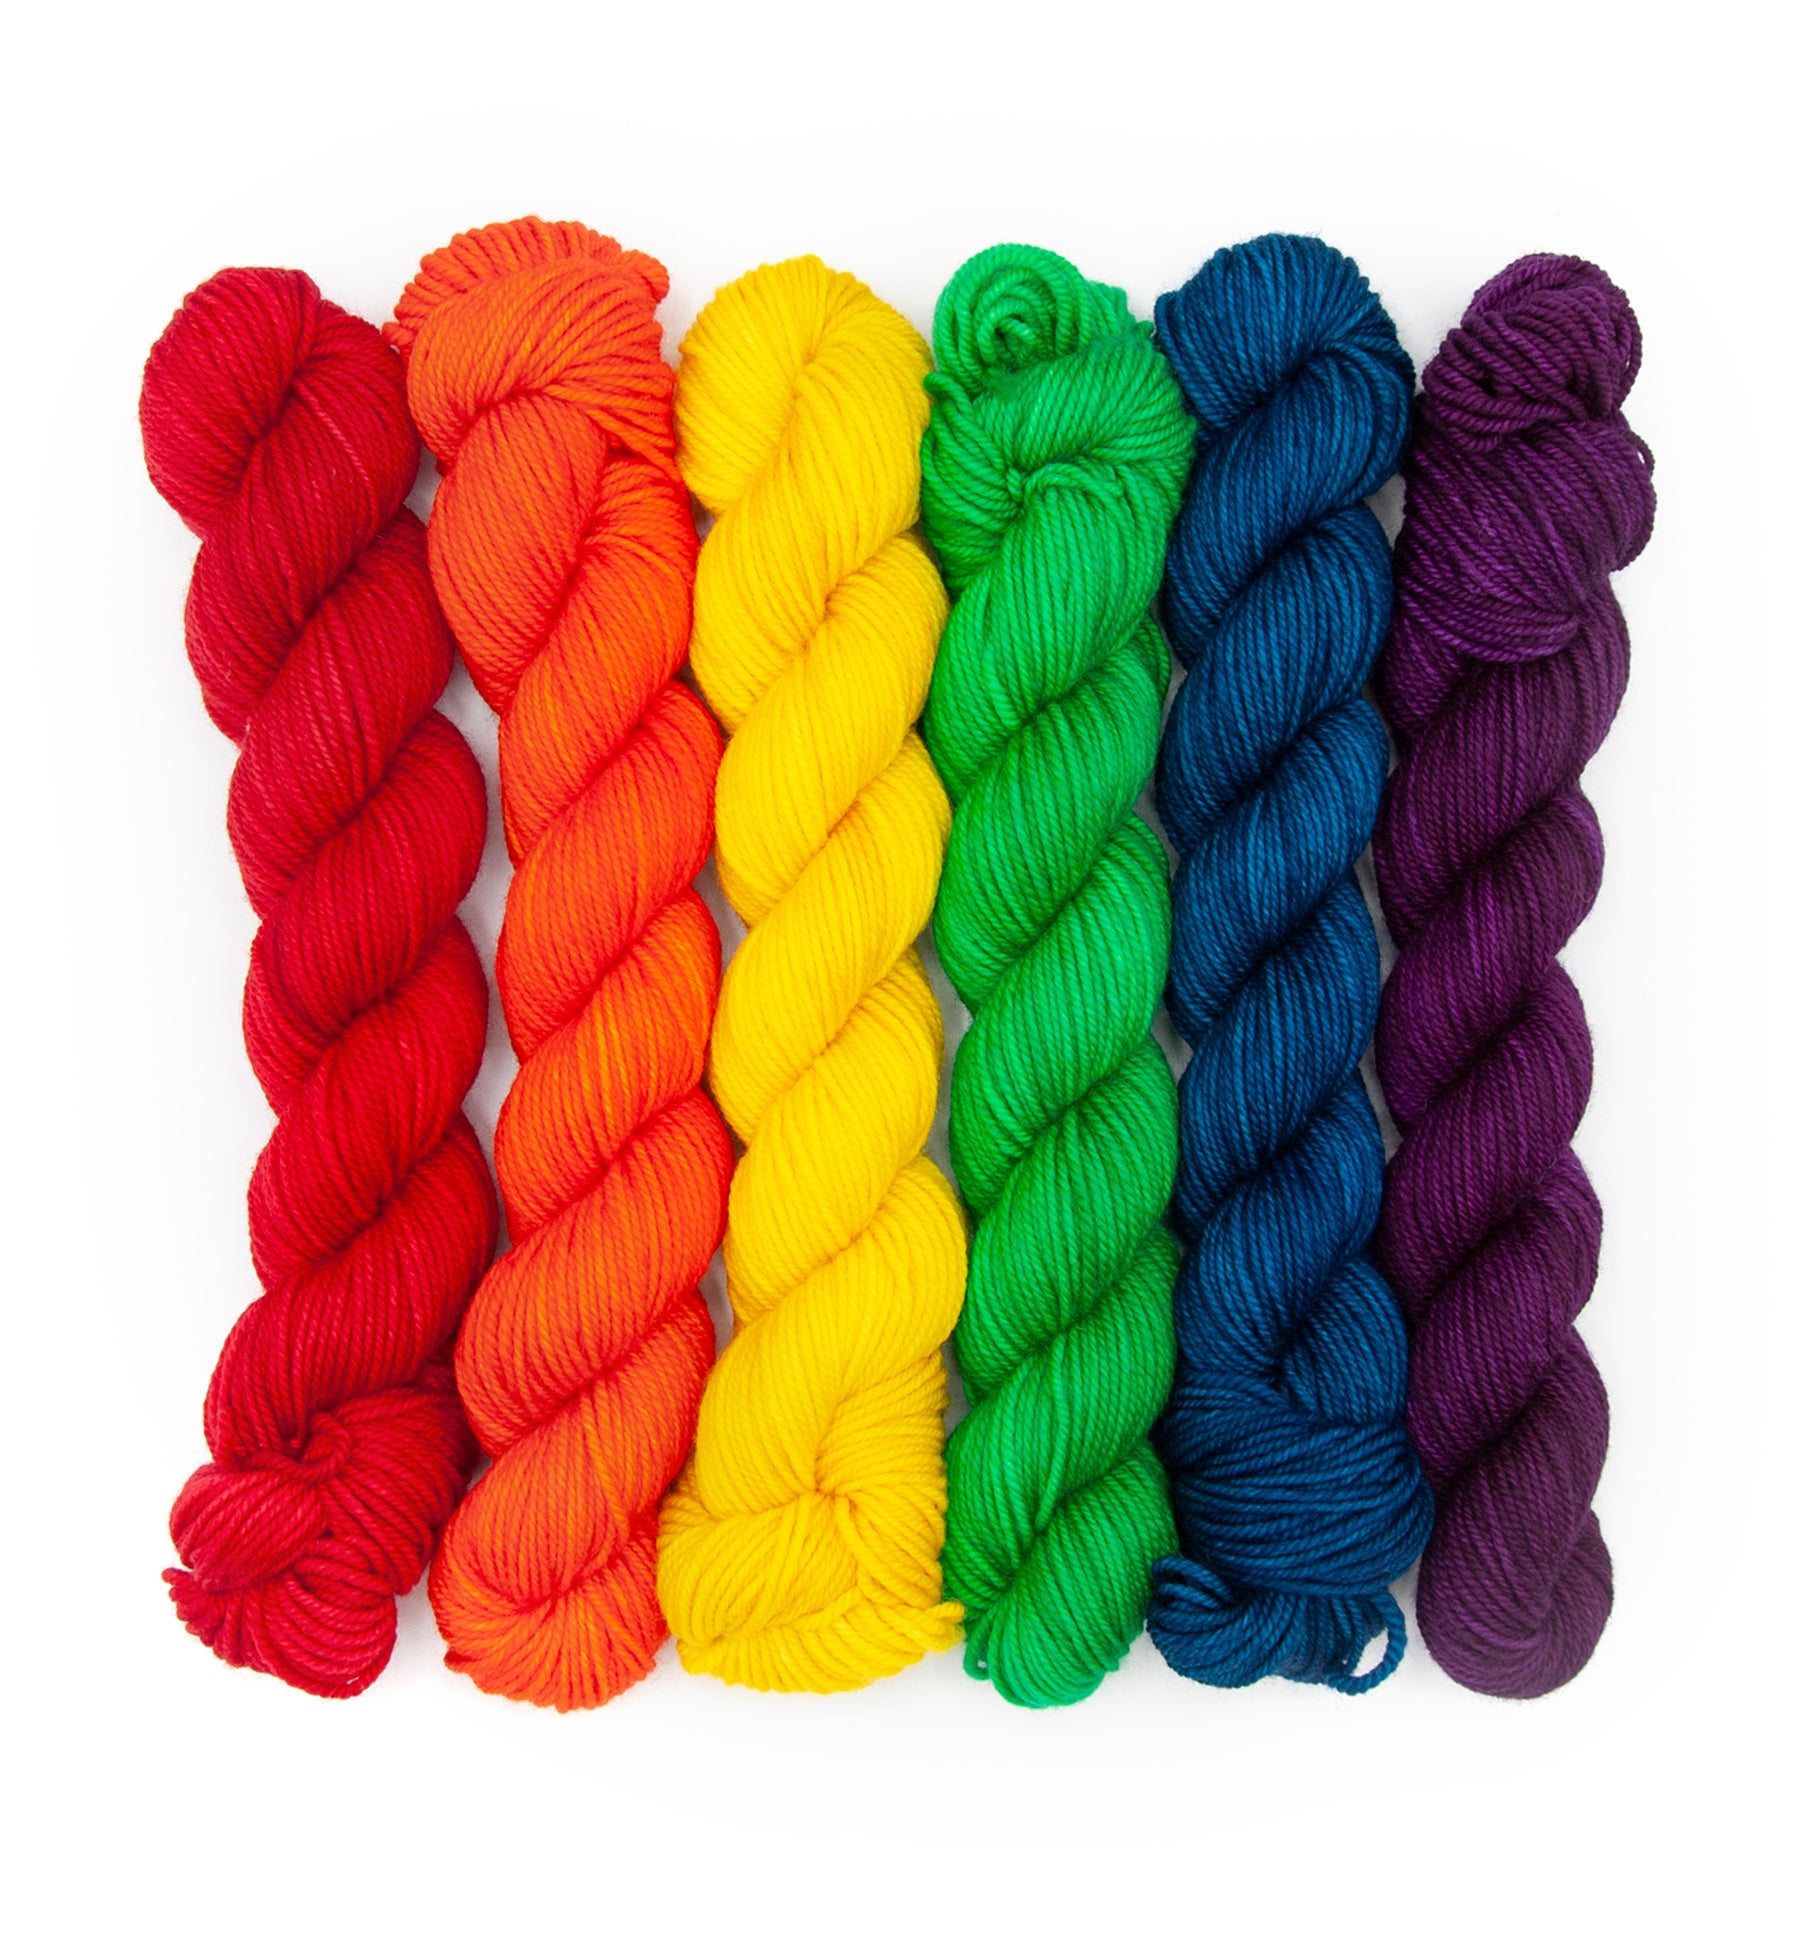 Hue Shift Yarn Pack - Rainbow